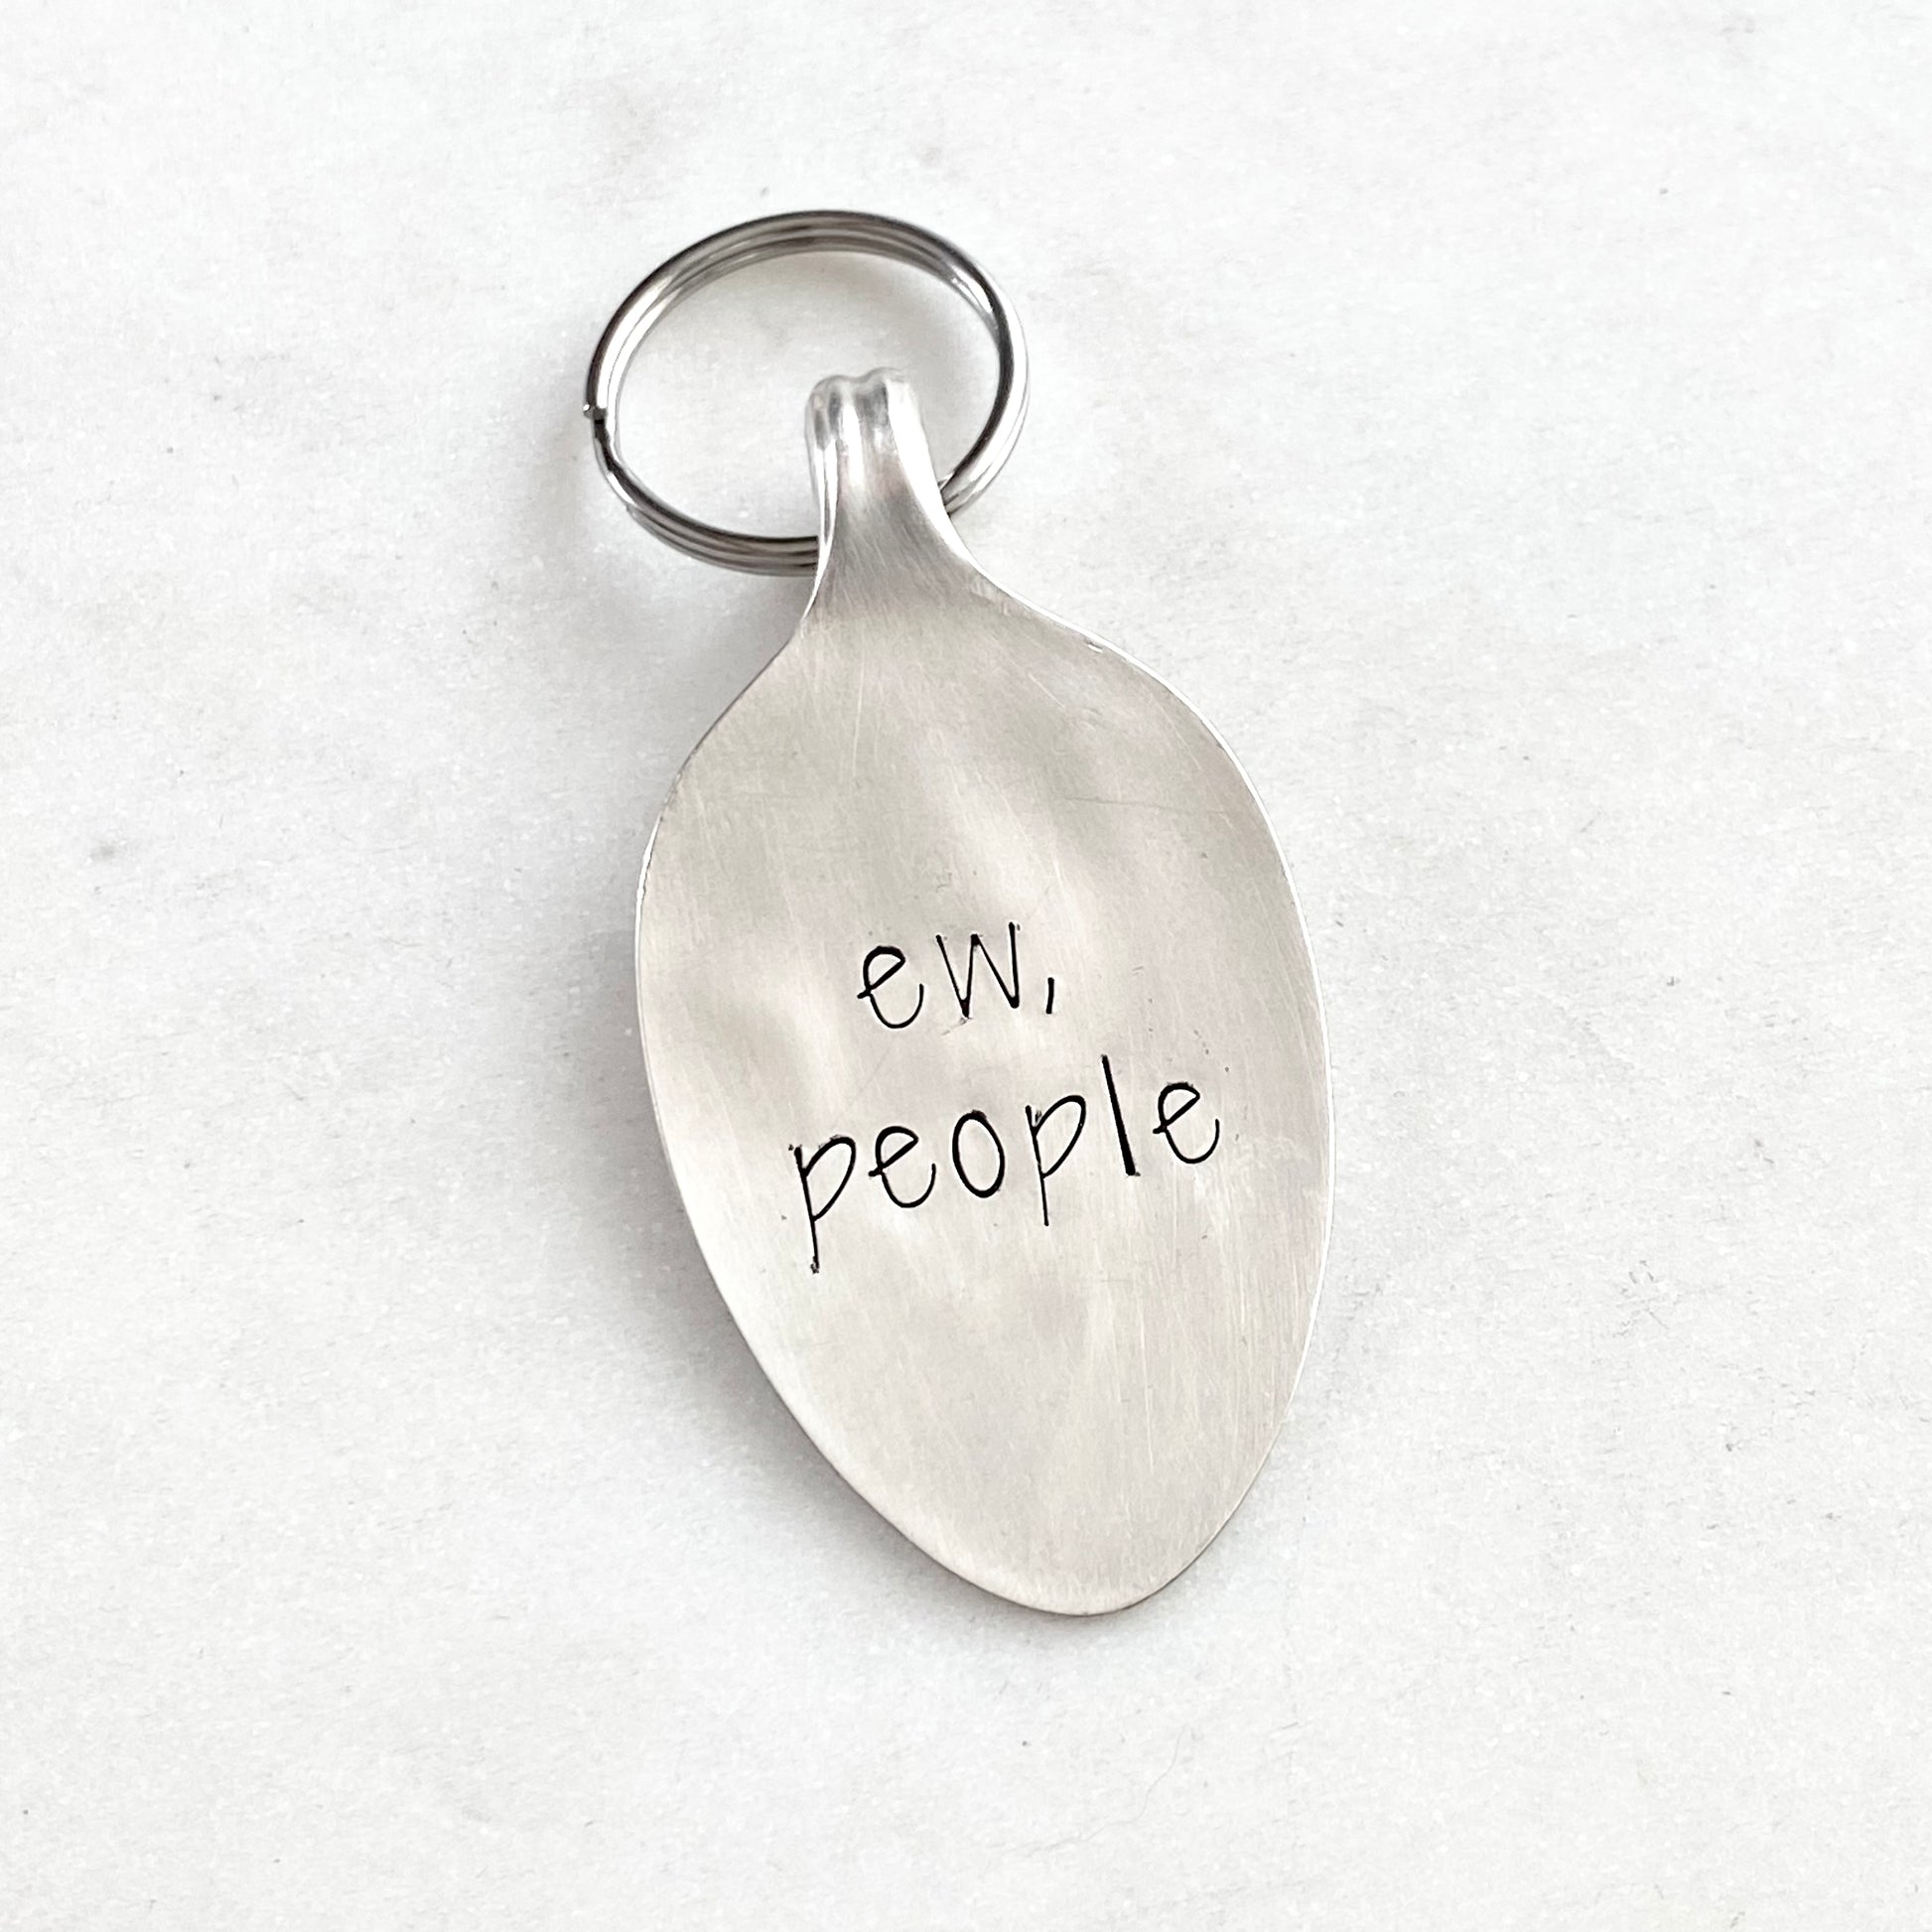 Ew People, Hand Stamped Vintage Spoon Keychain Keychains callistafaye   